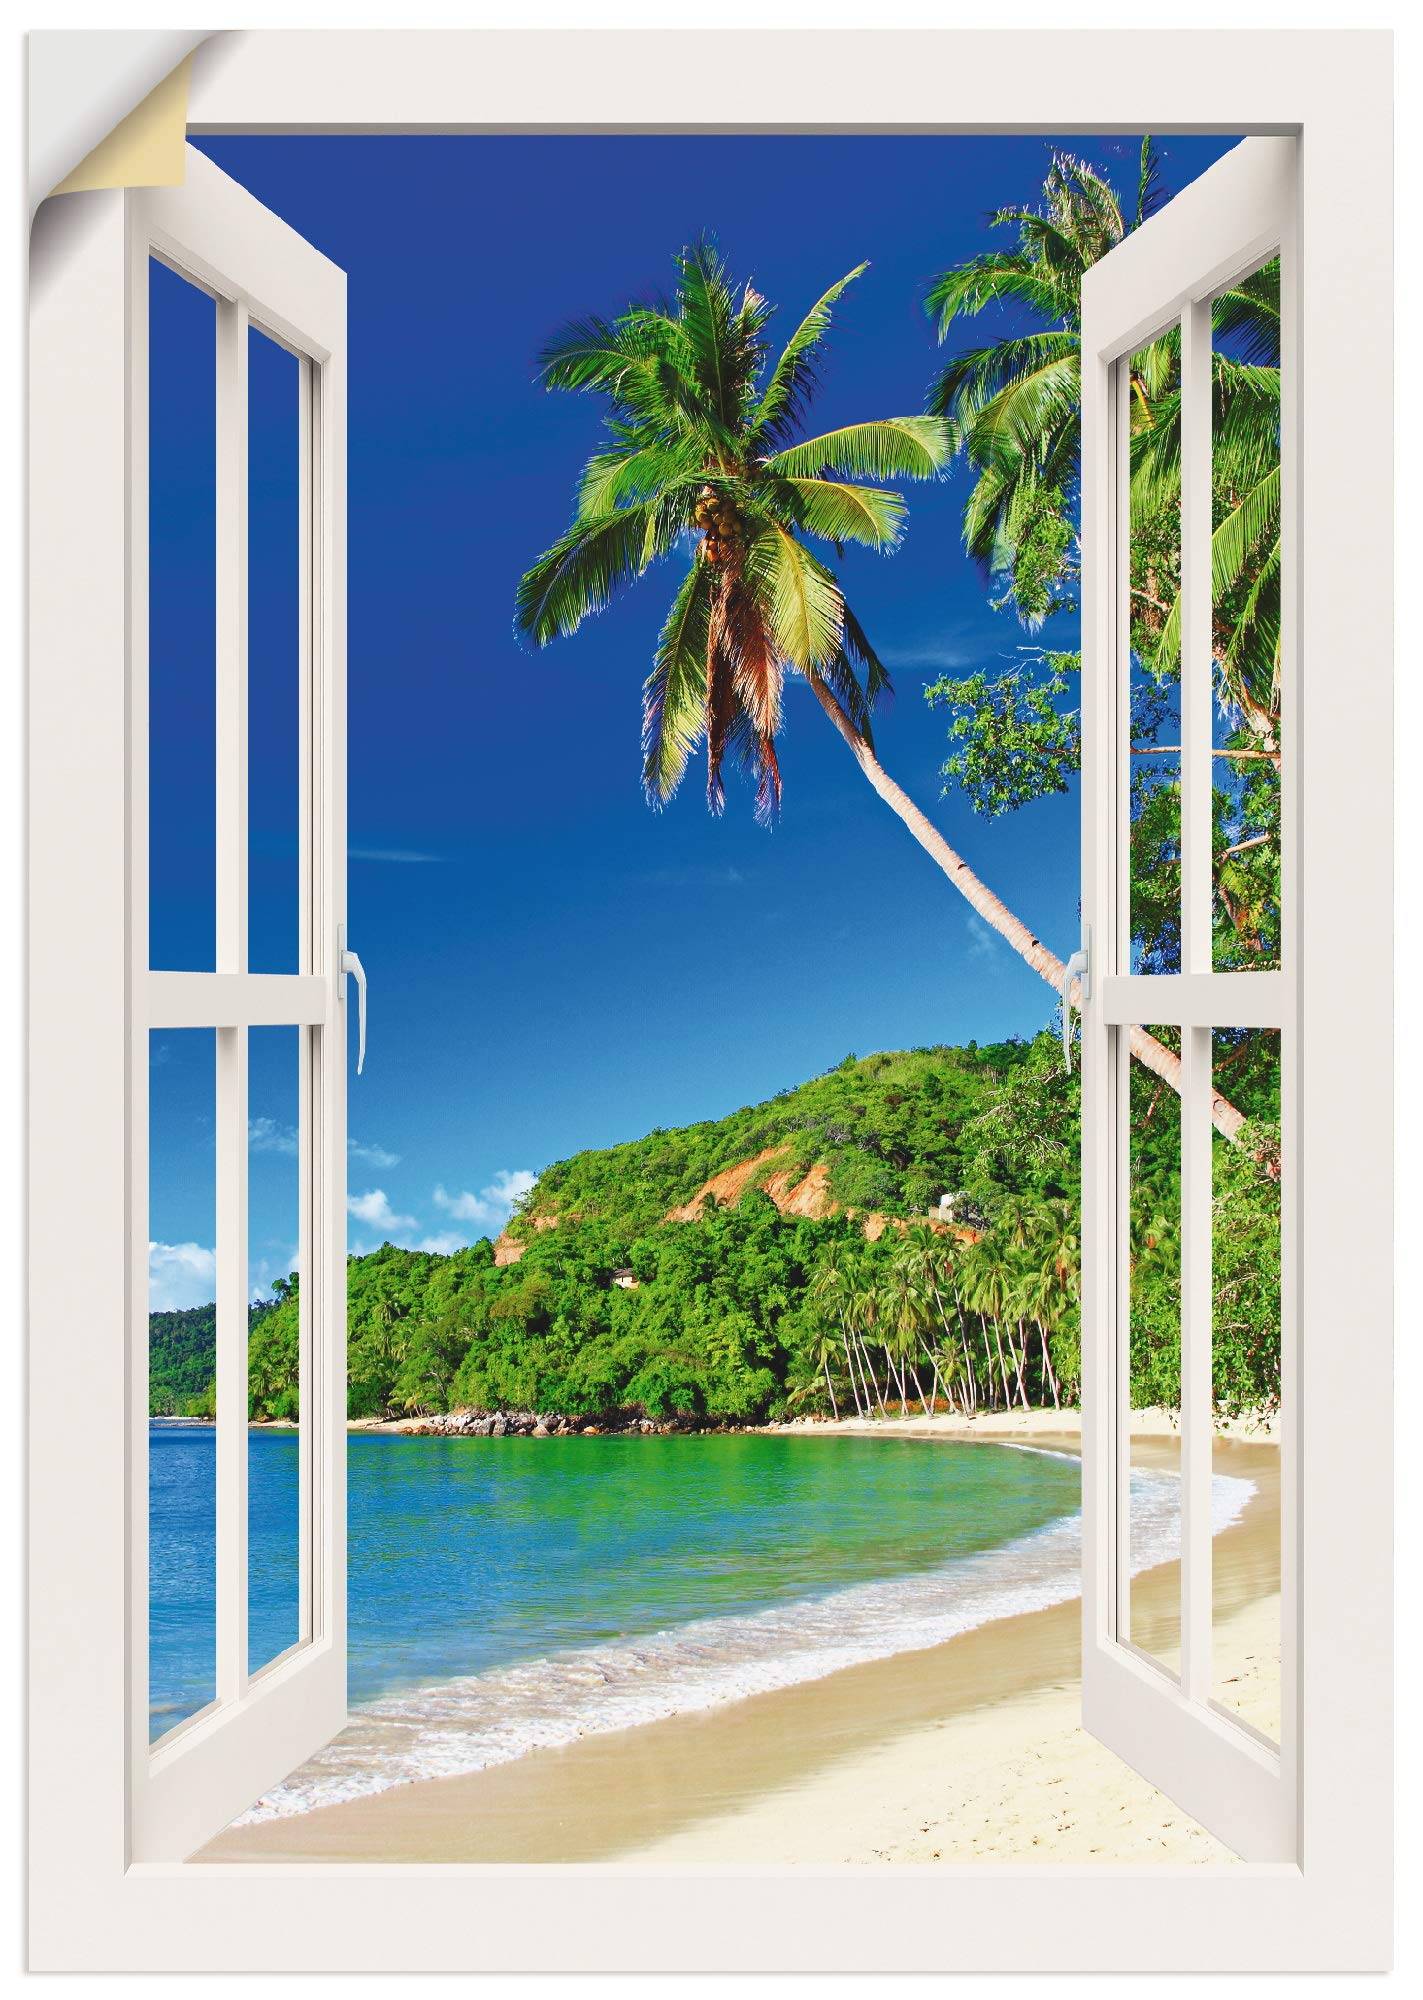 ARTland Wandbild selbstklebend Vinylfolie 50x70 cm Fensterblick Karibik Südsee Strand Meer Insel Palmen Meerblick S9IC